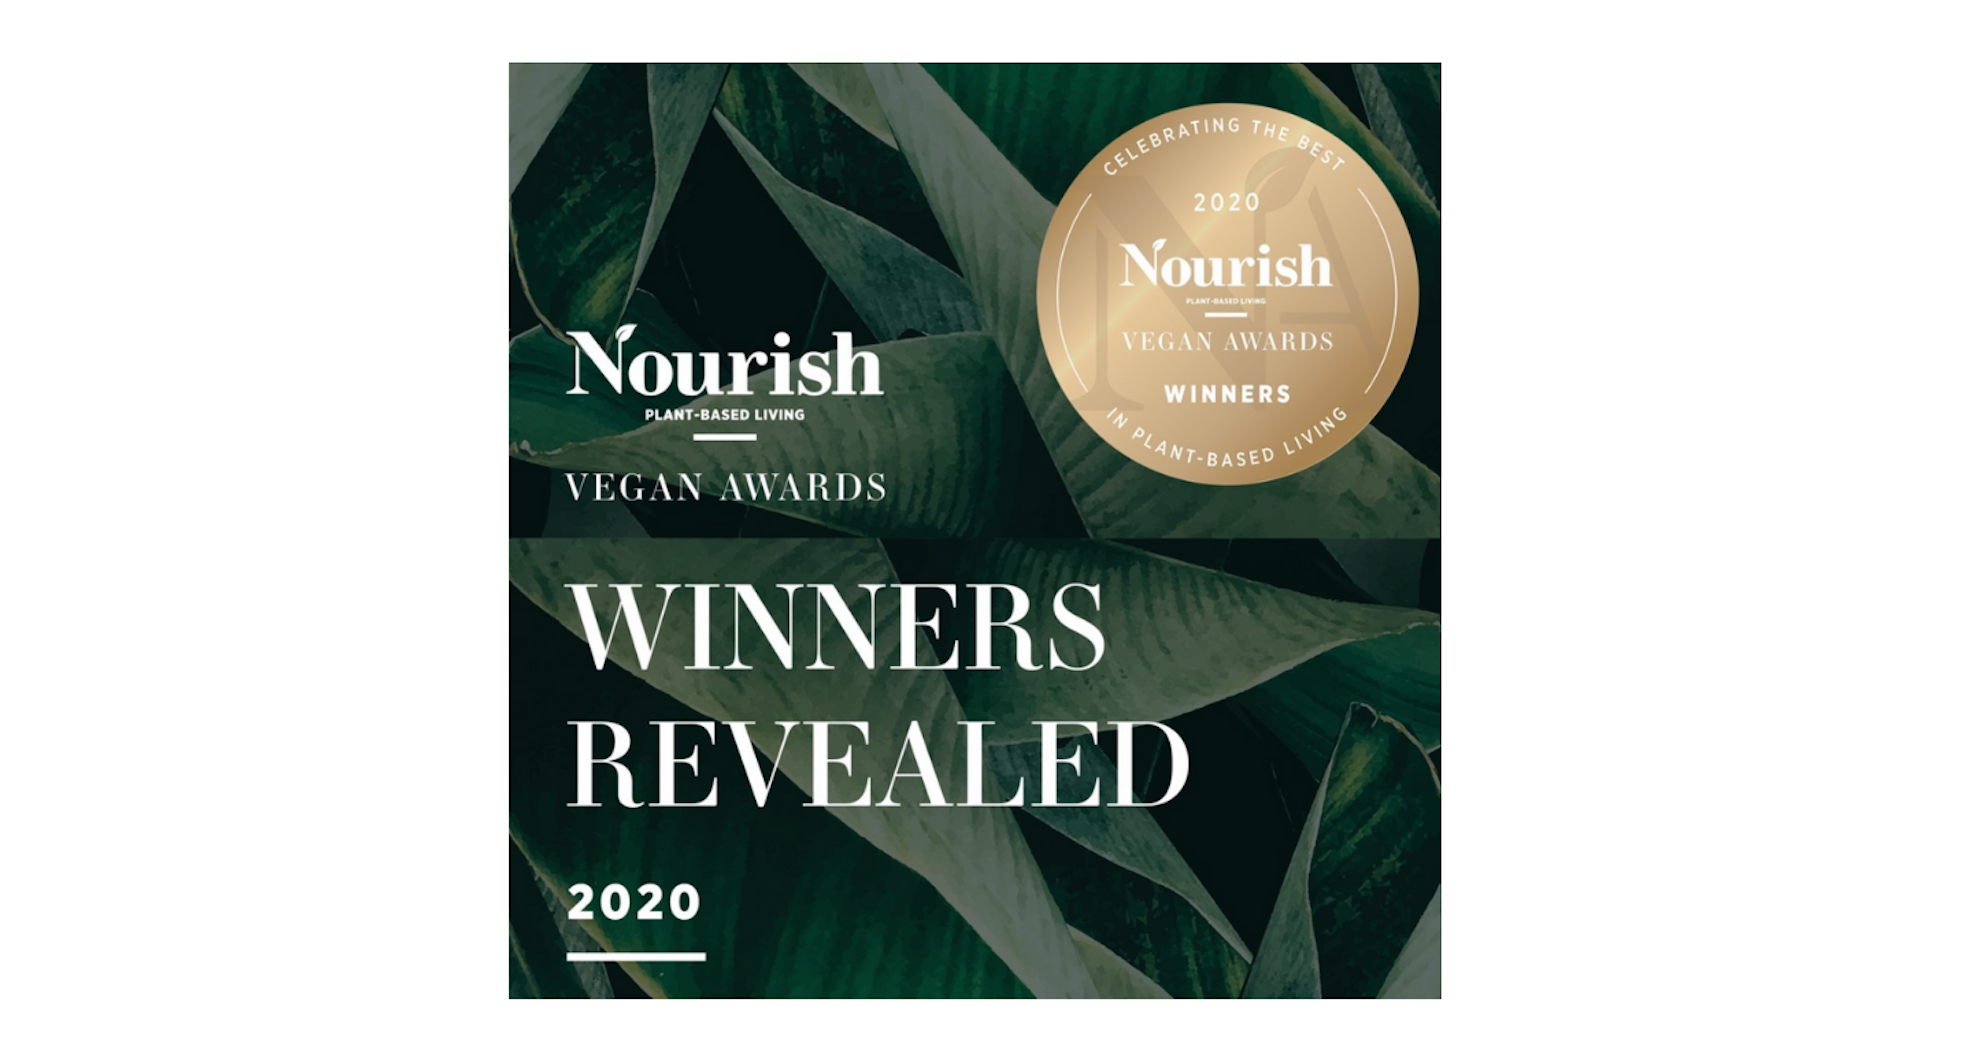 Amazonia, Bodhi Restaurant, Cobs & Pana amongst winners announced for Nourish Vegan Awards 2020